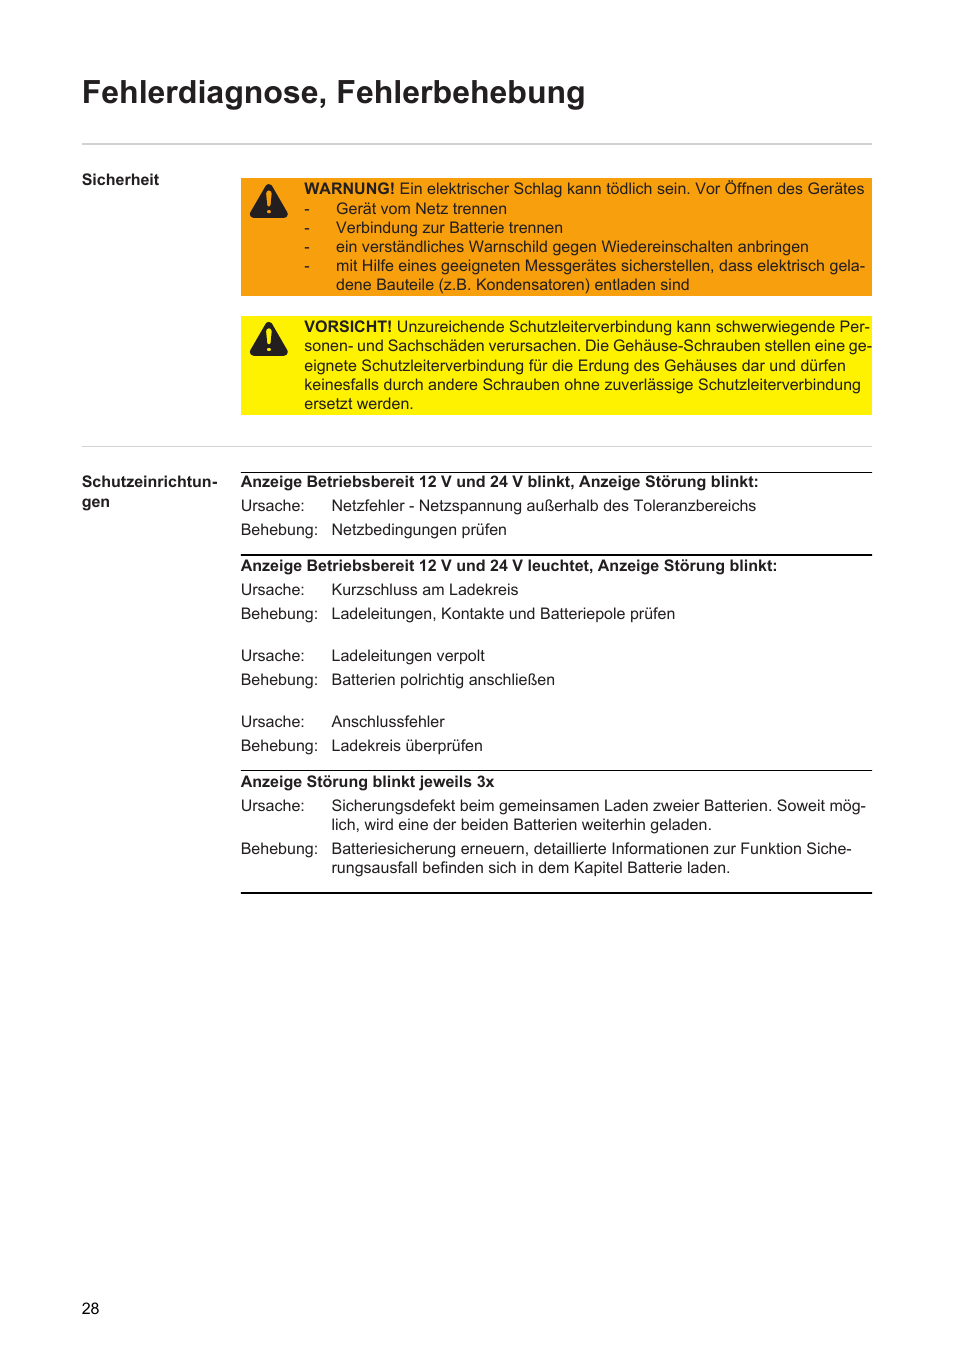 Fehlerdiagnose, fehlerbehebung | Fronius Acctiva Twin 15A User Manual | Page 30 / 122